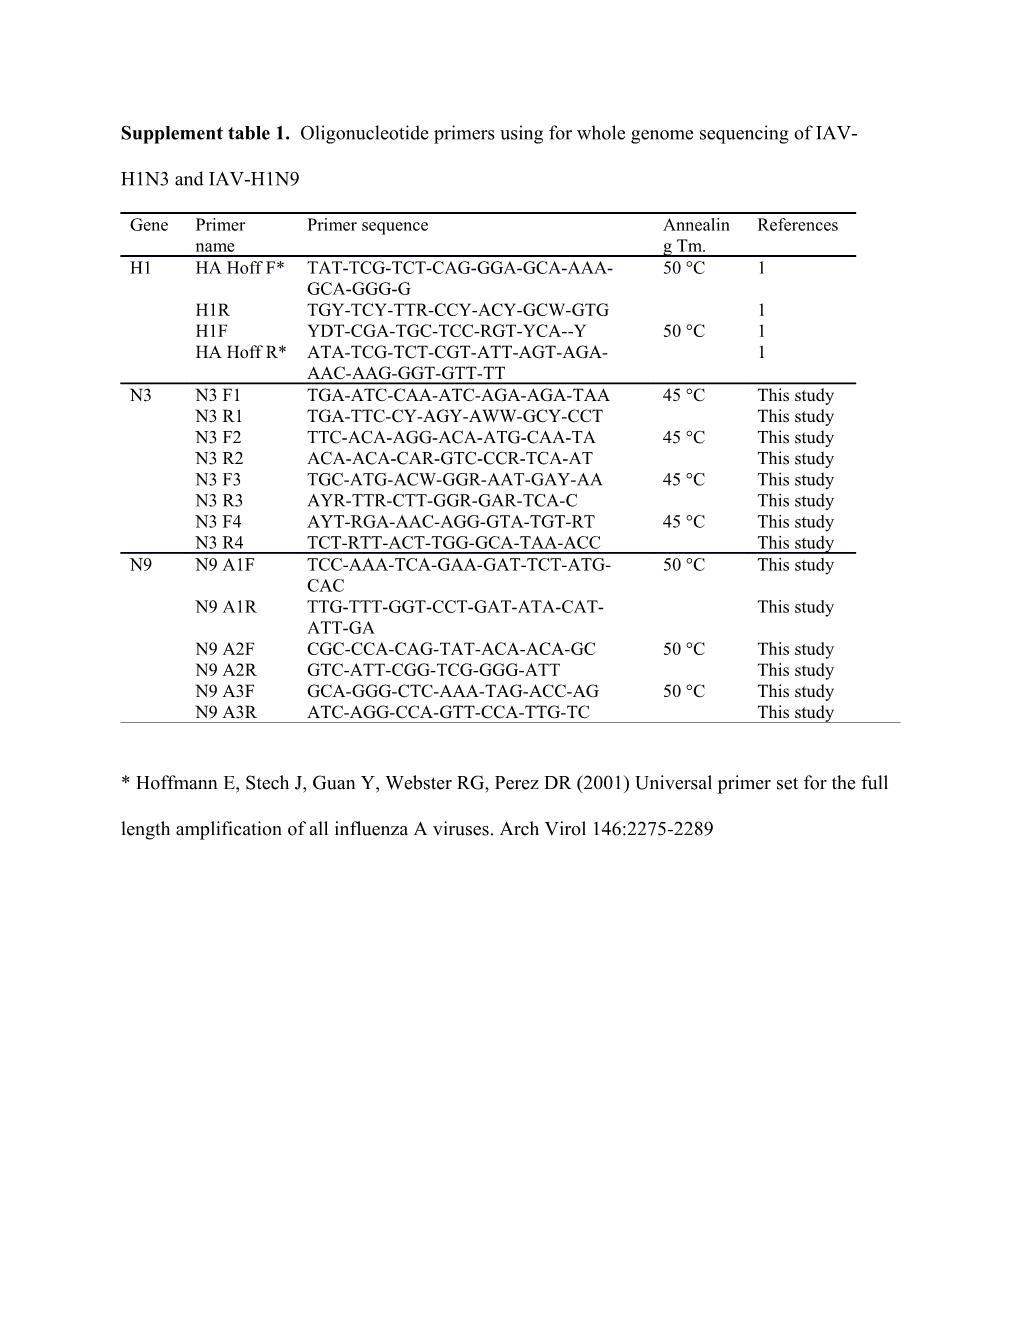 Supplement Table 2 . Nucleotide Identities of IAV-H1N3 and IAV-H1N9 by Using BLAST Analysis